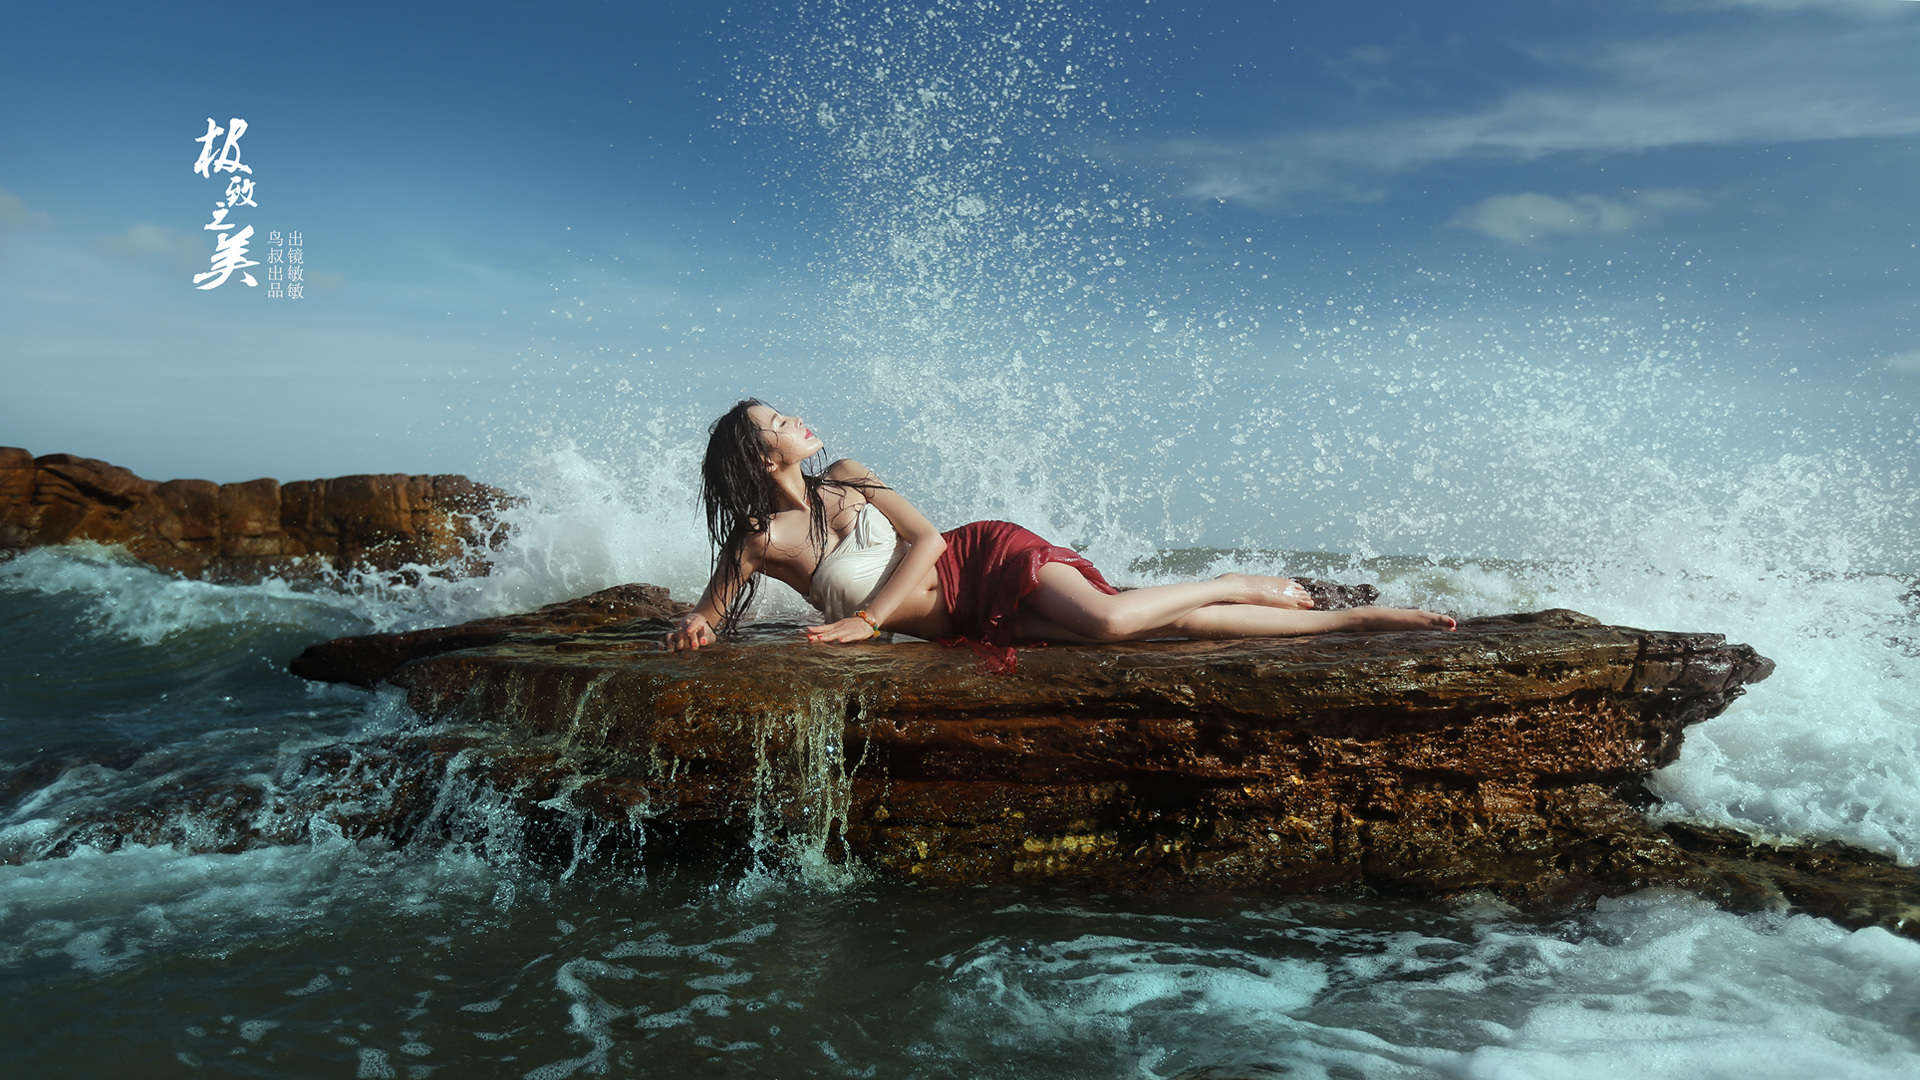 Women Asian Photography Model Brunette Long Hair Women Outdoors Sea Rocks Barefoot Water Splash 1920x1080